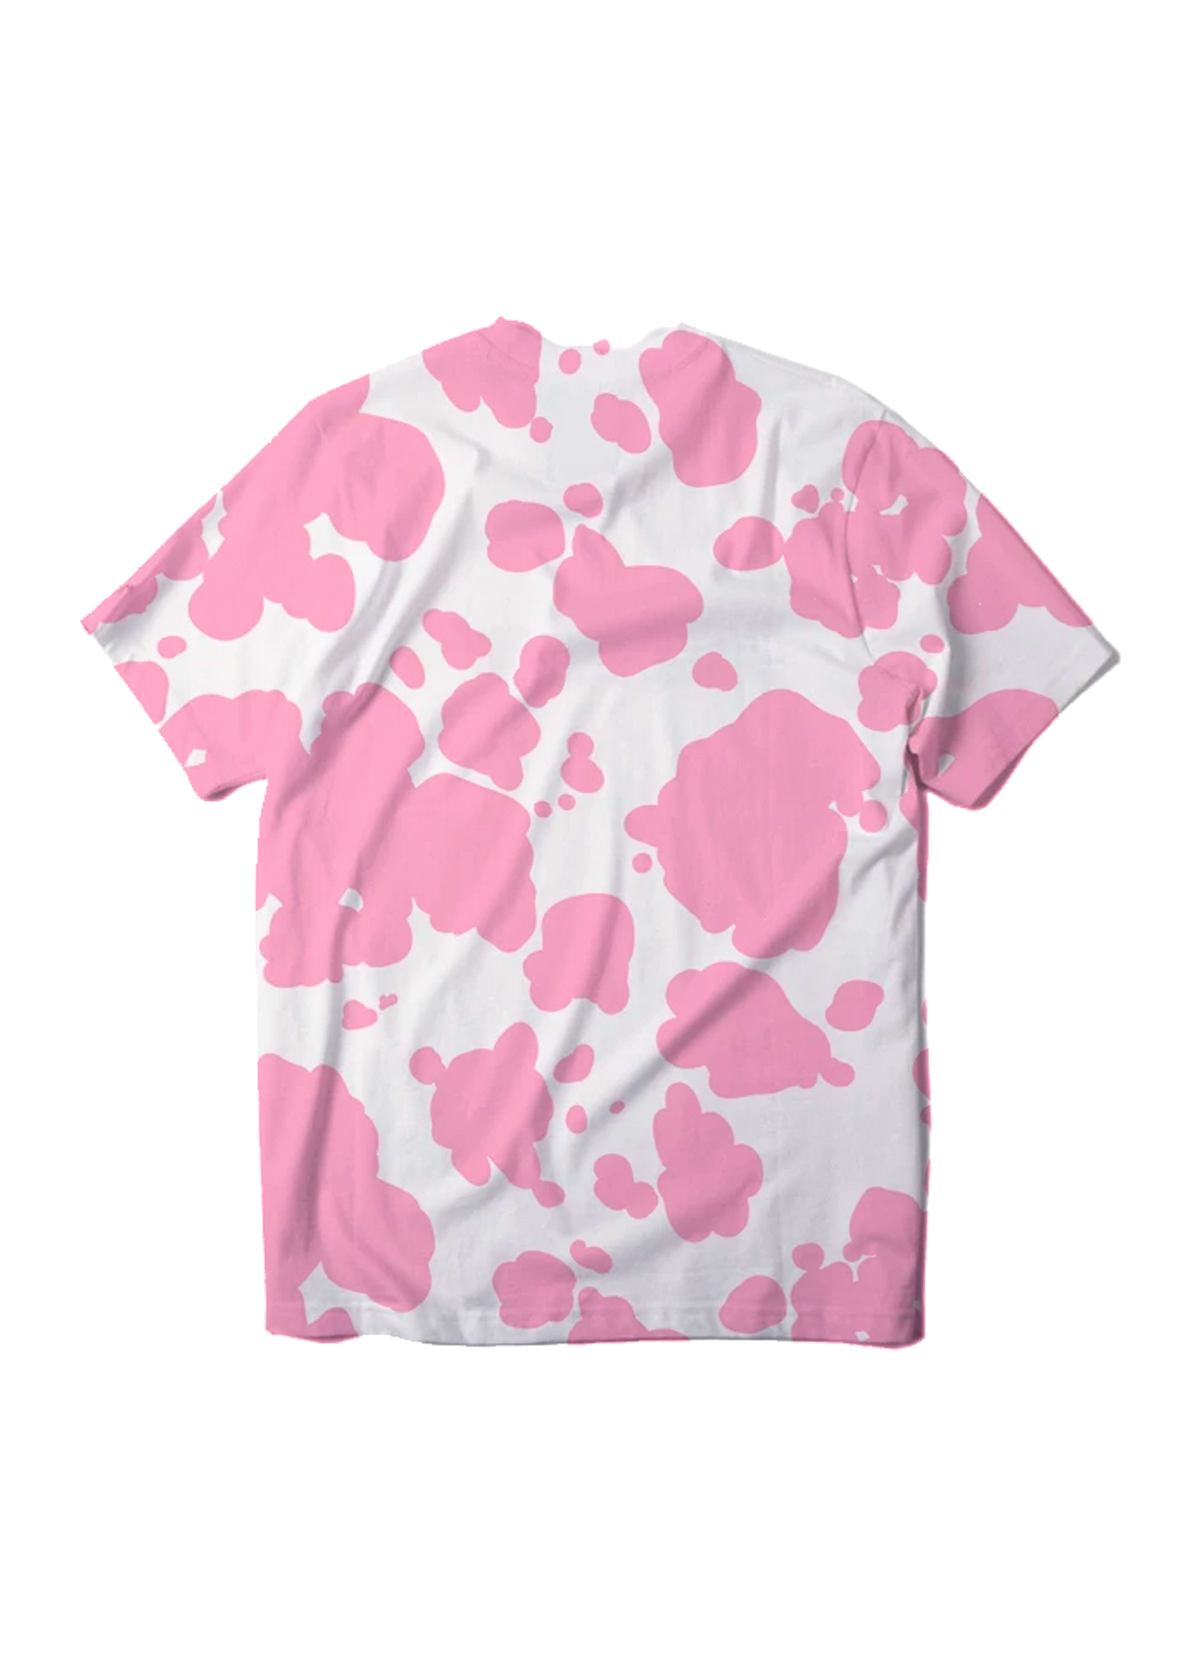 3XL pink cow print tee